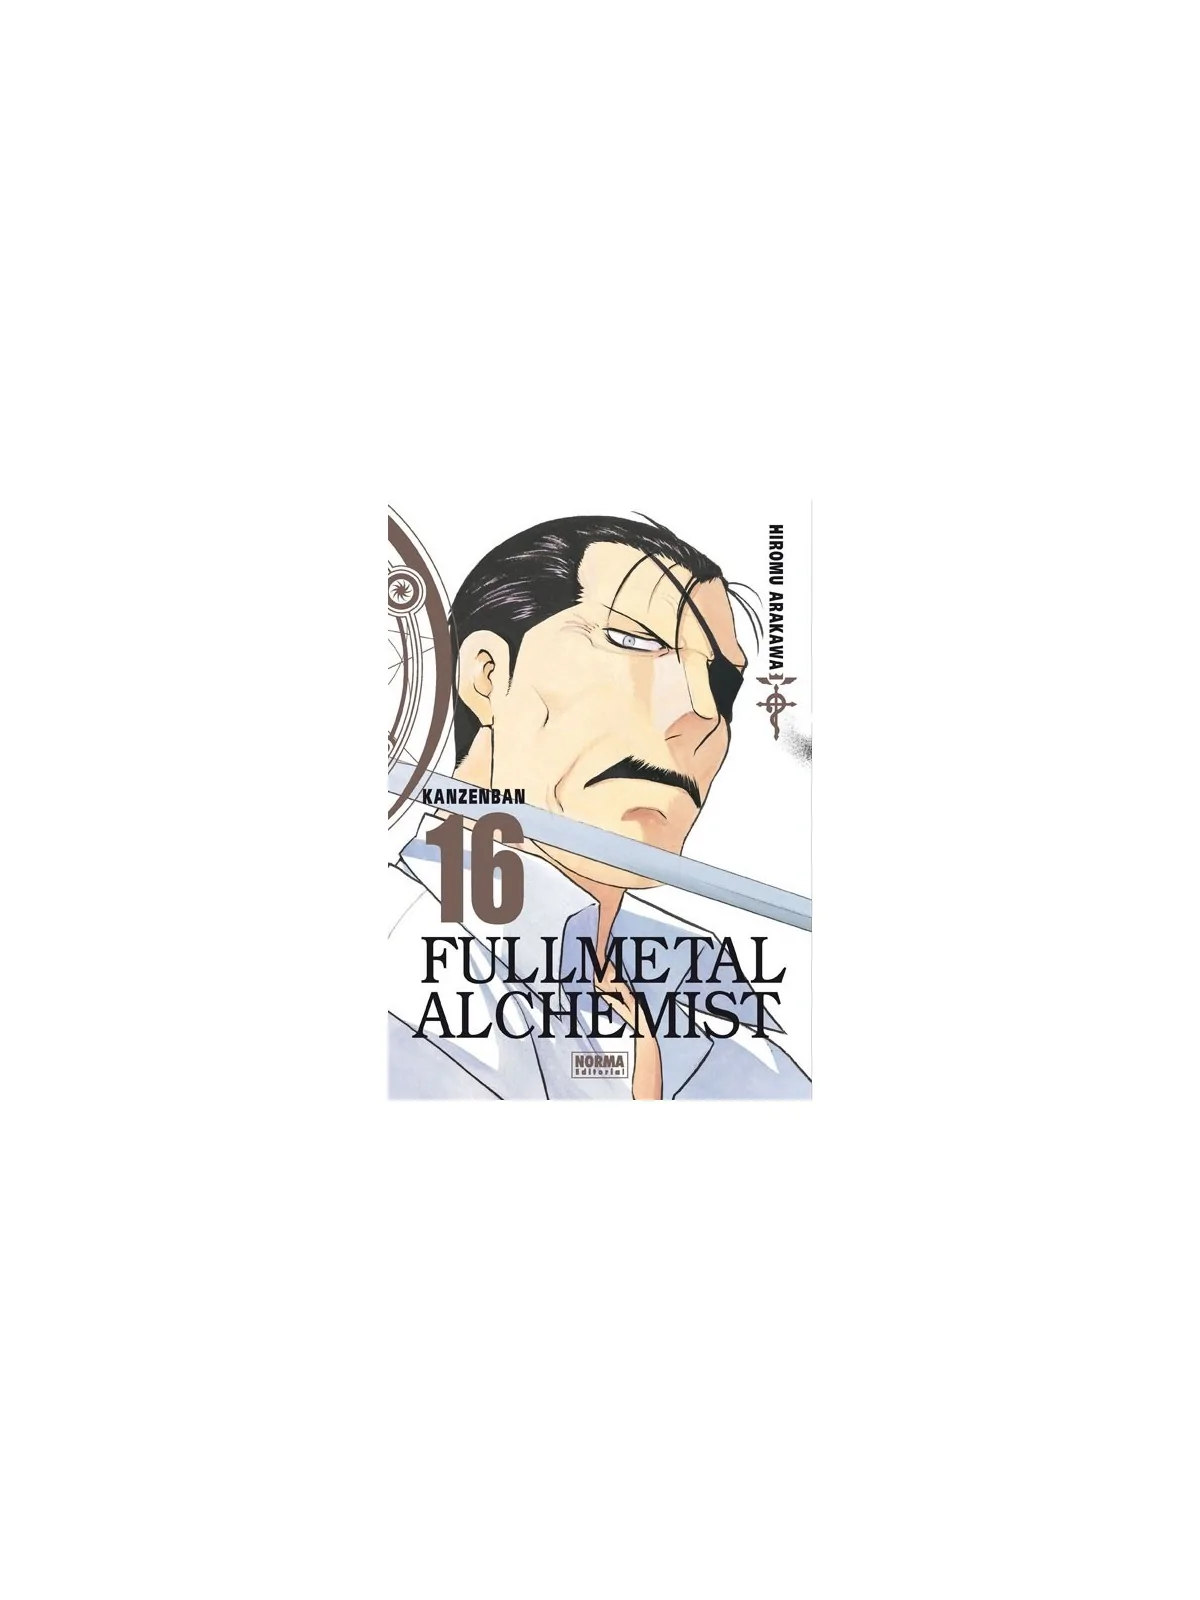 Comprar Fullmetal Alchemist Kanzenban 16 barato al mejor precio 11,35 